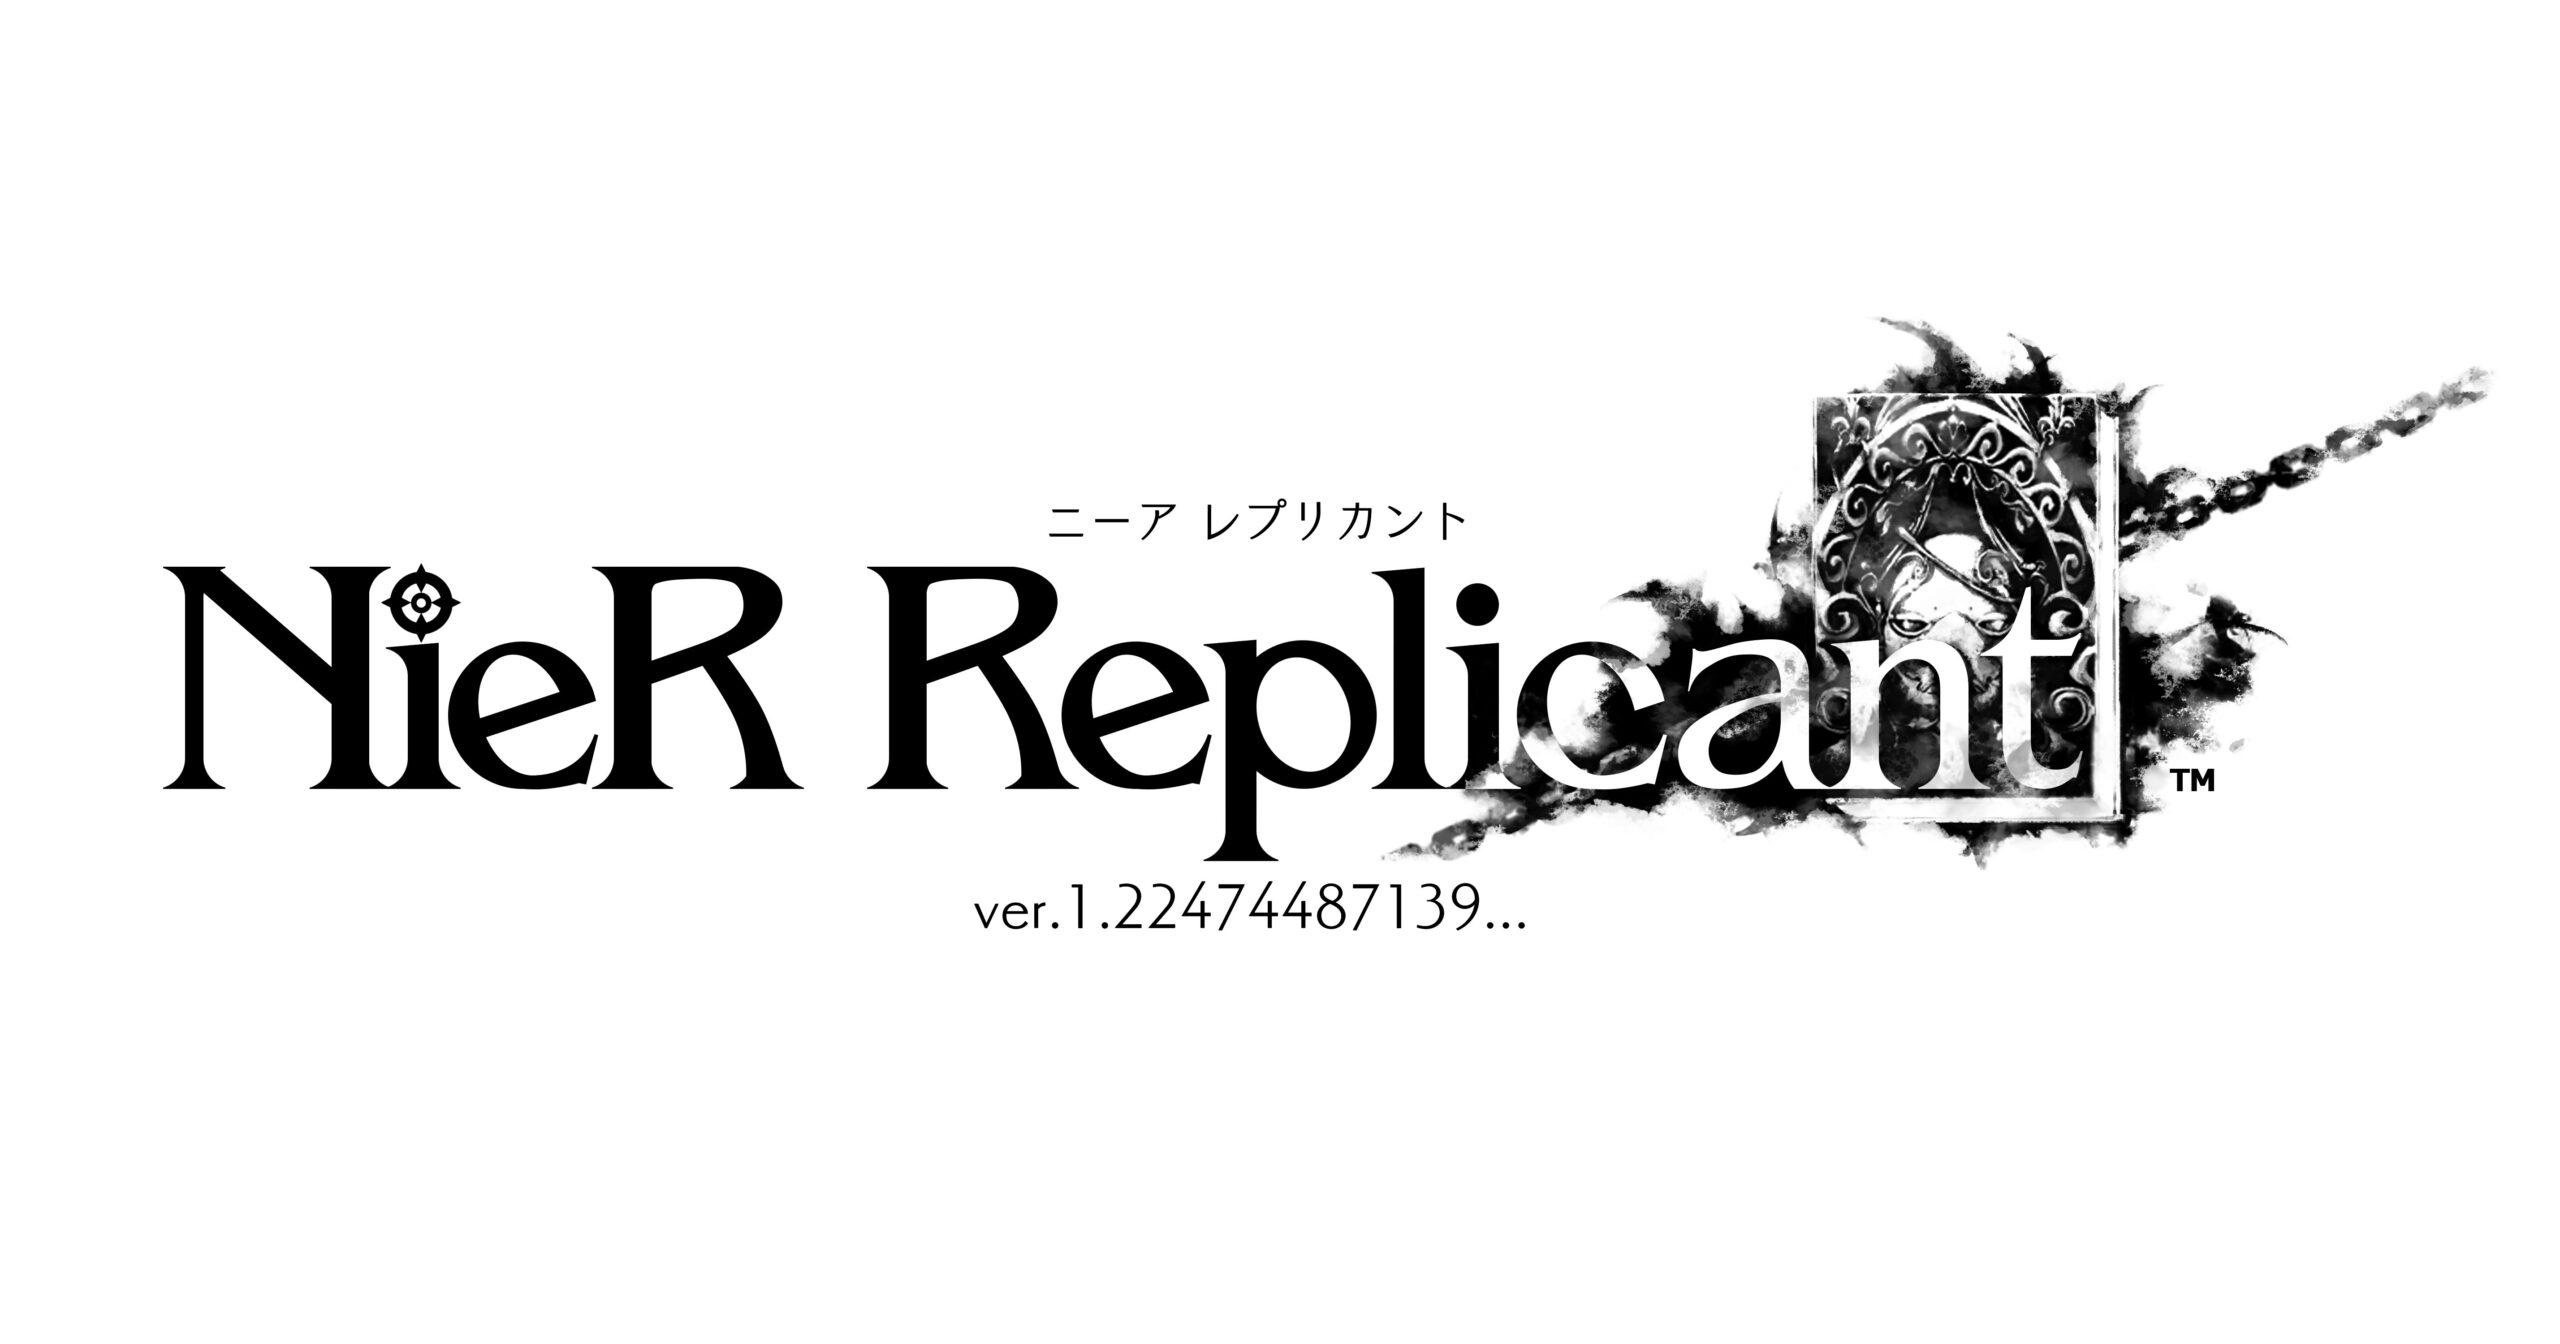 NieR Replicant ver.1.22474487139…, Square Enix, PlayStation 4, 662248924403  